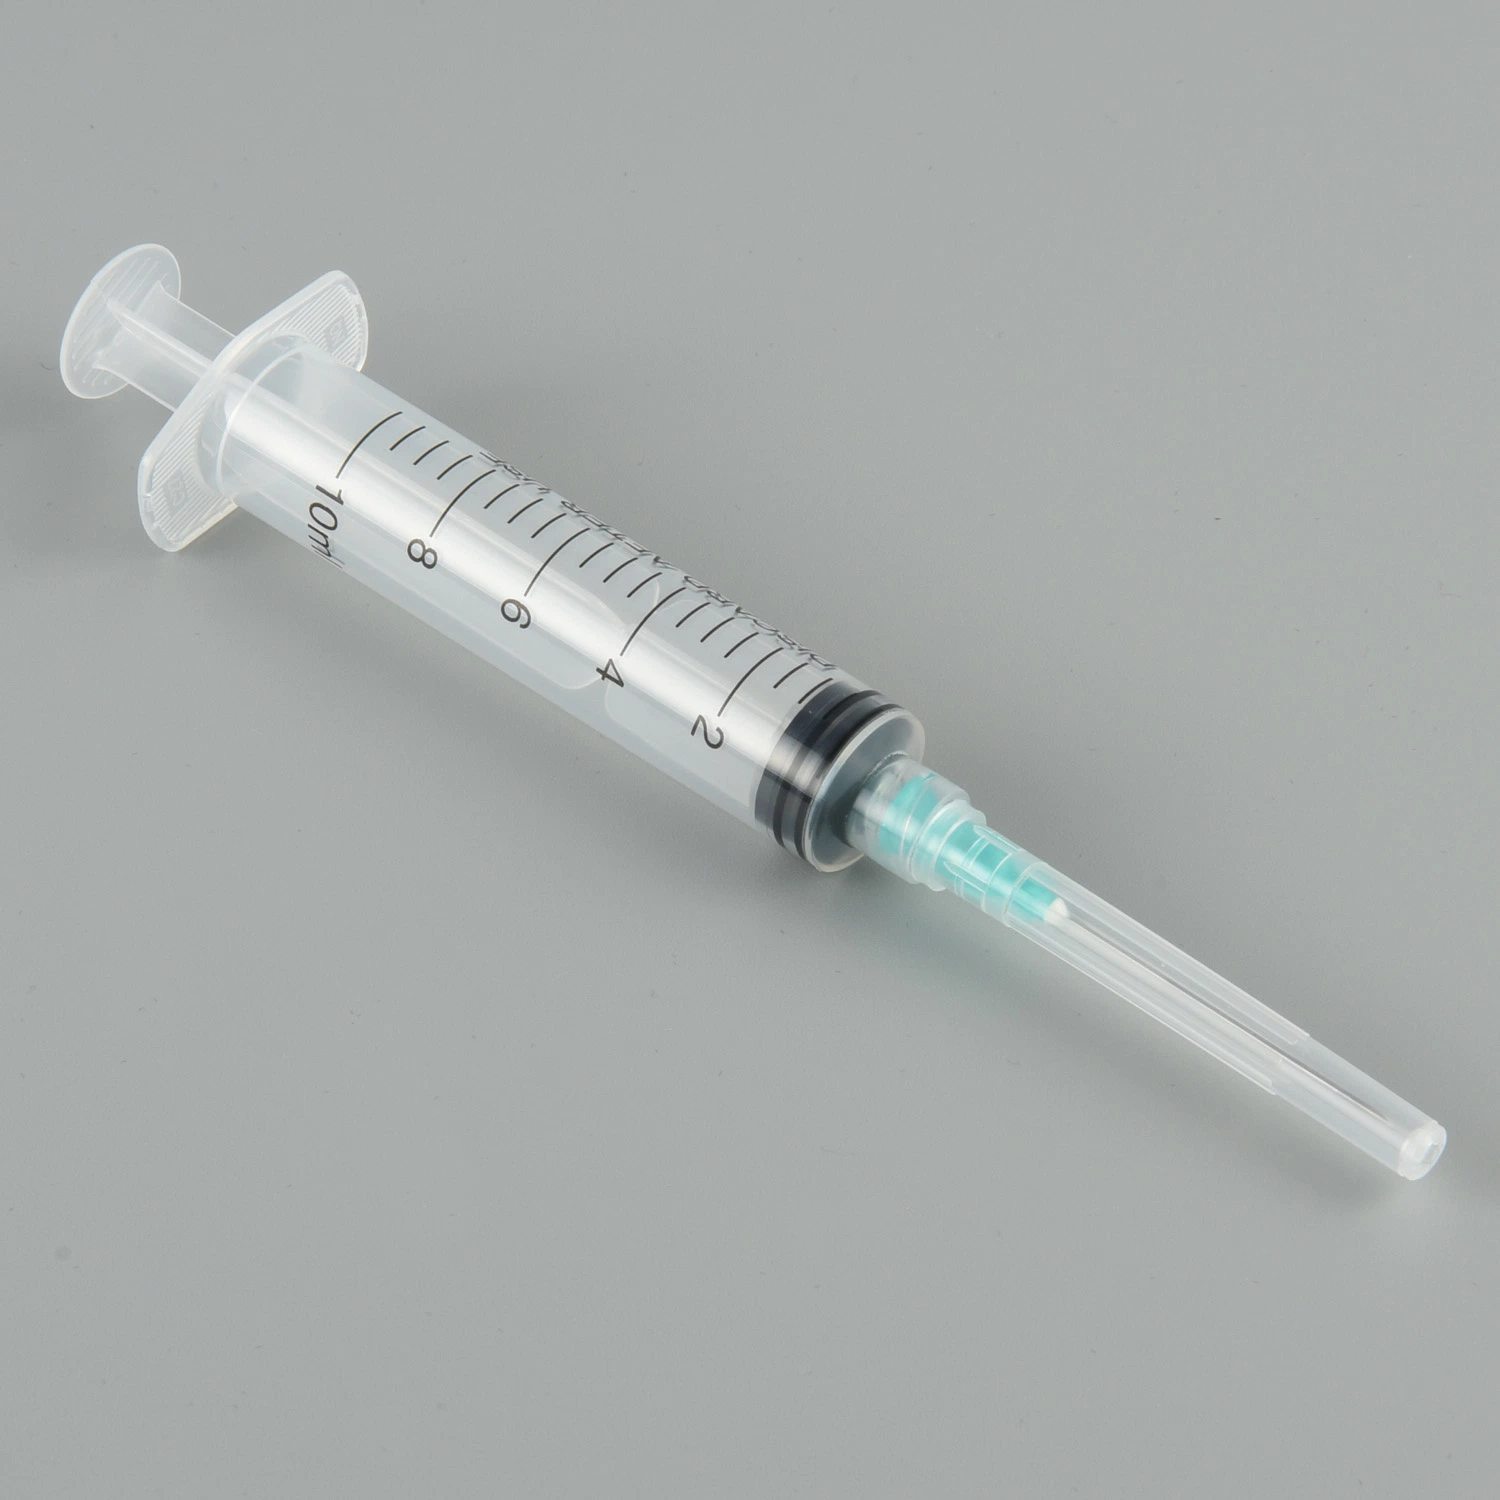 1ml 2ml 3ml 5ml 10ml Disposable Auto Disable Syringe with Needle